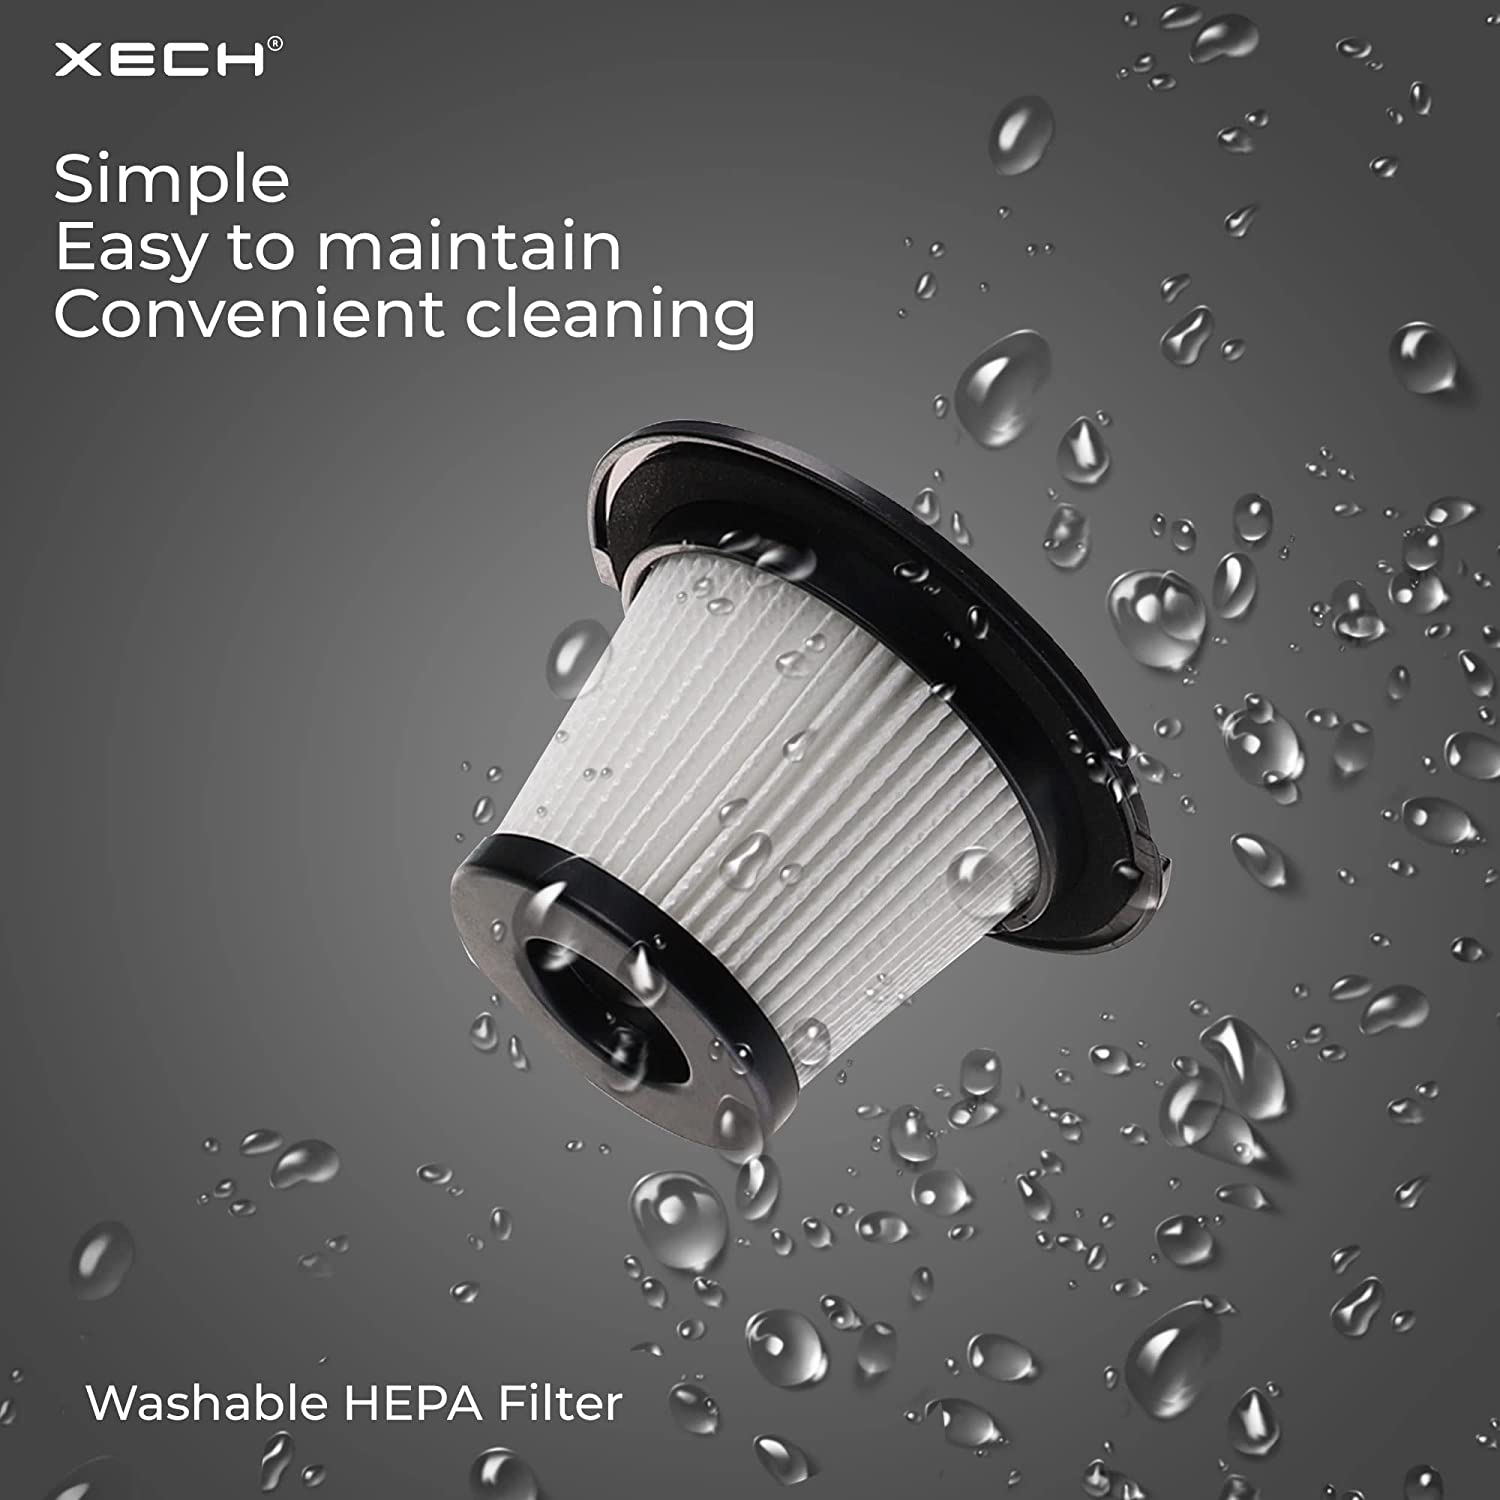 XECH - V-SHARK - Cordless Rechargeable Handheld Vacuum Cleaner